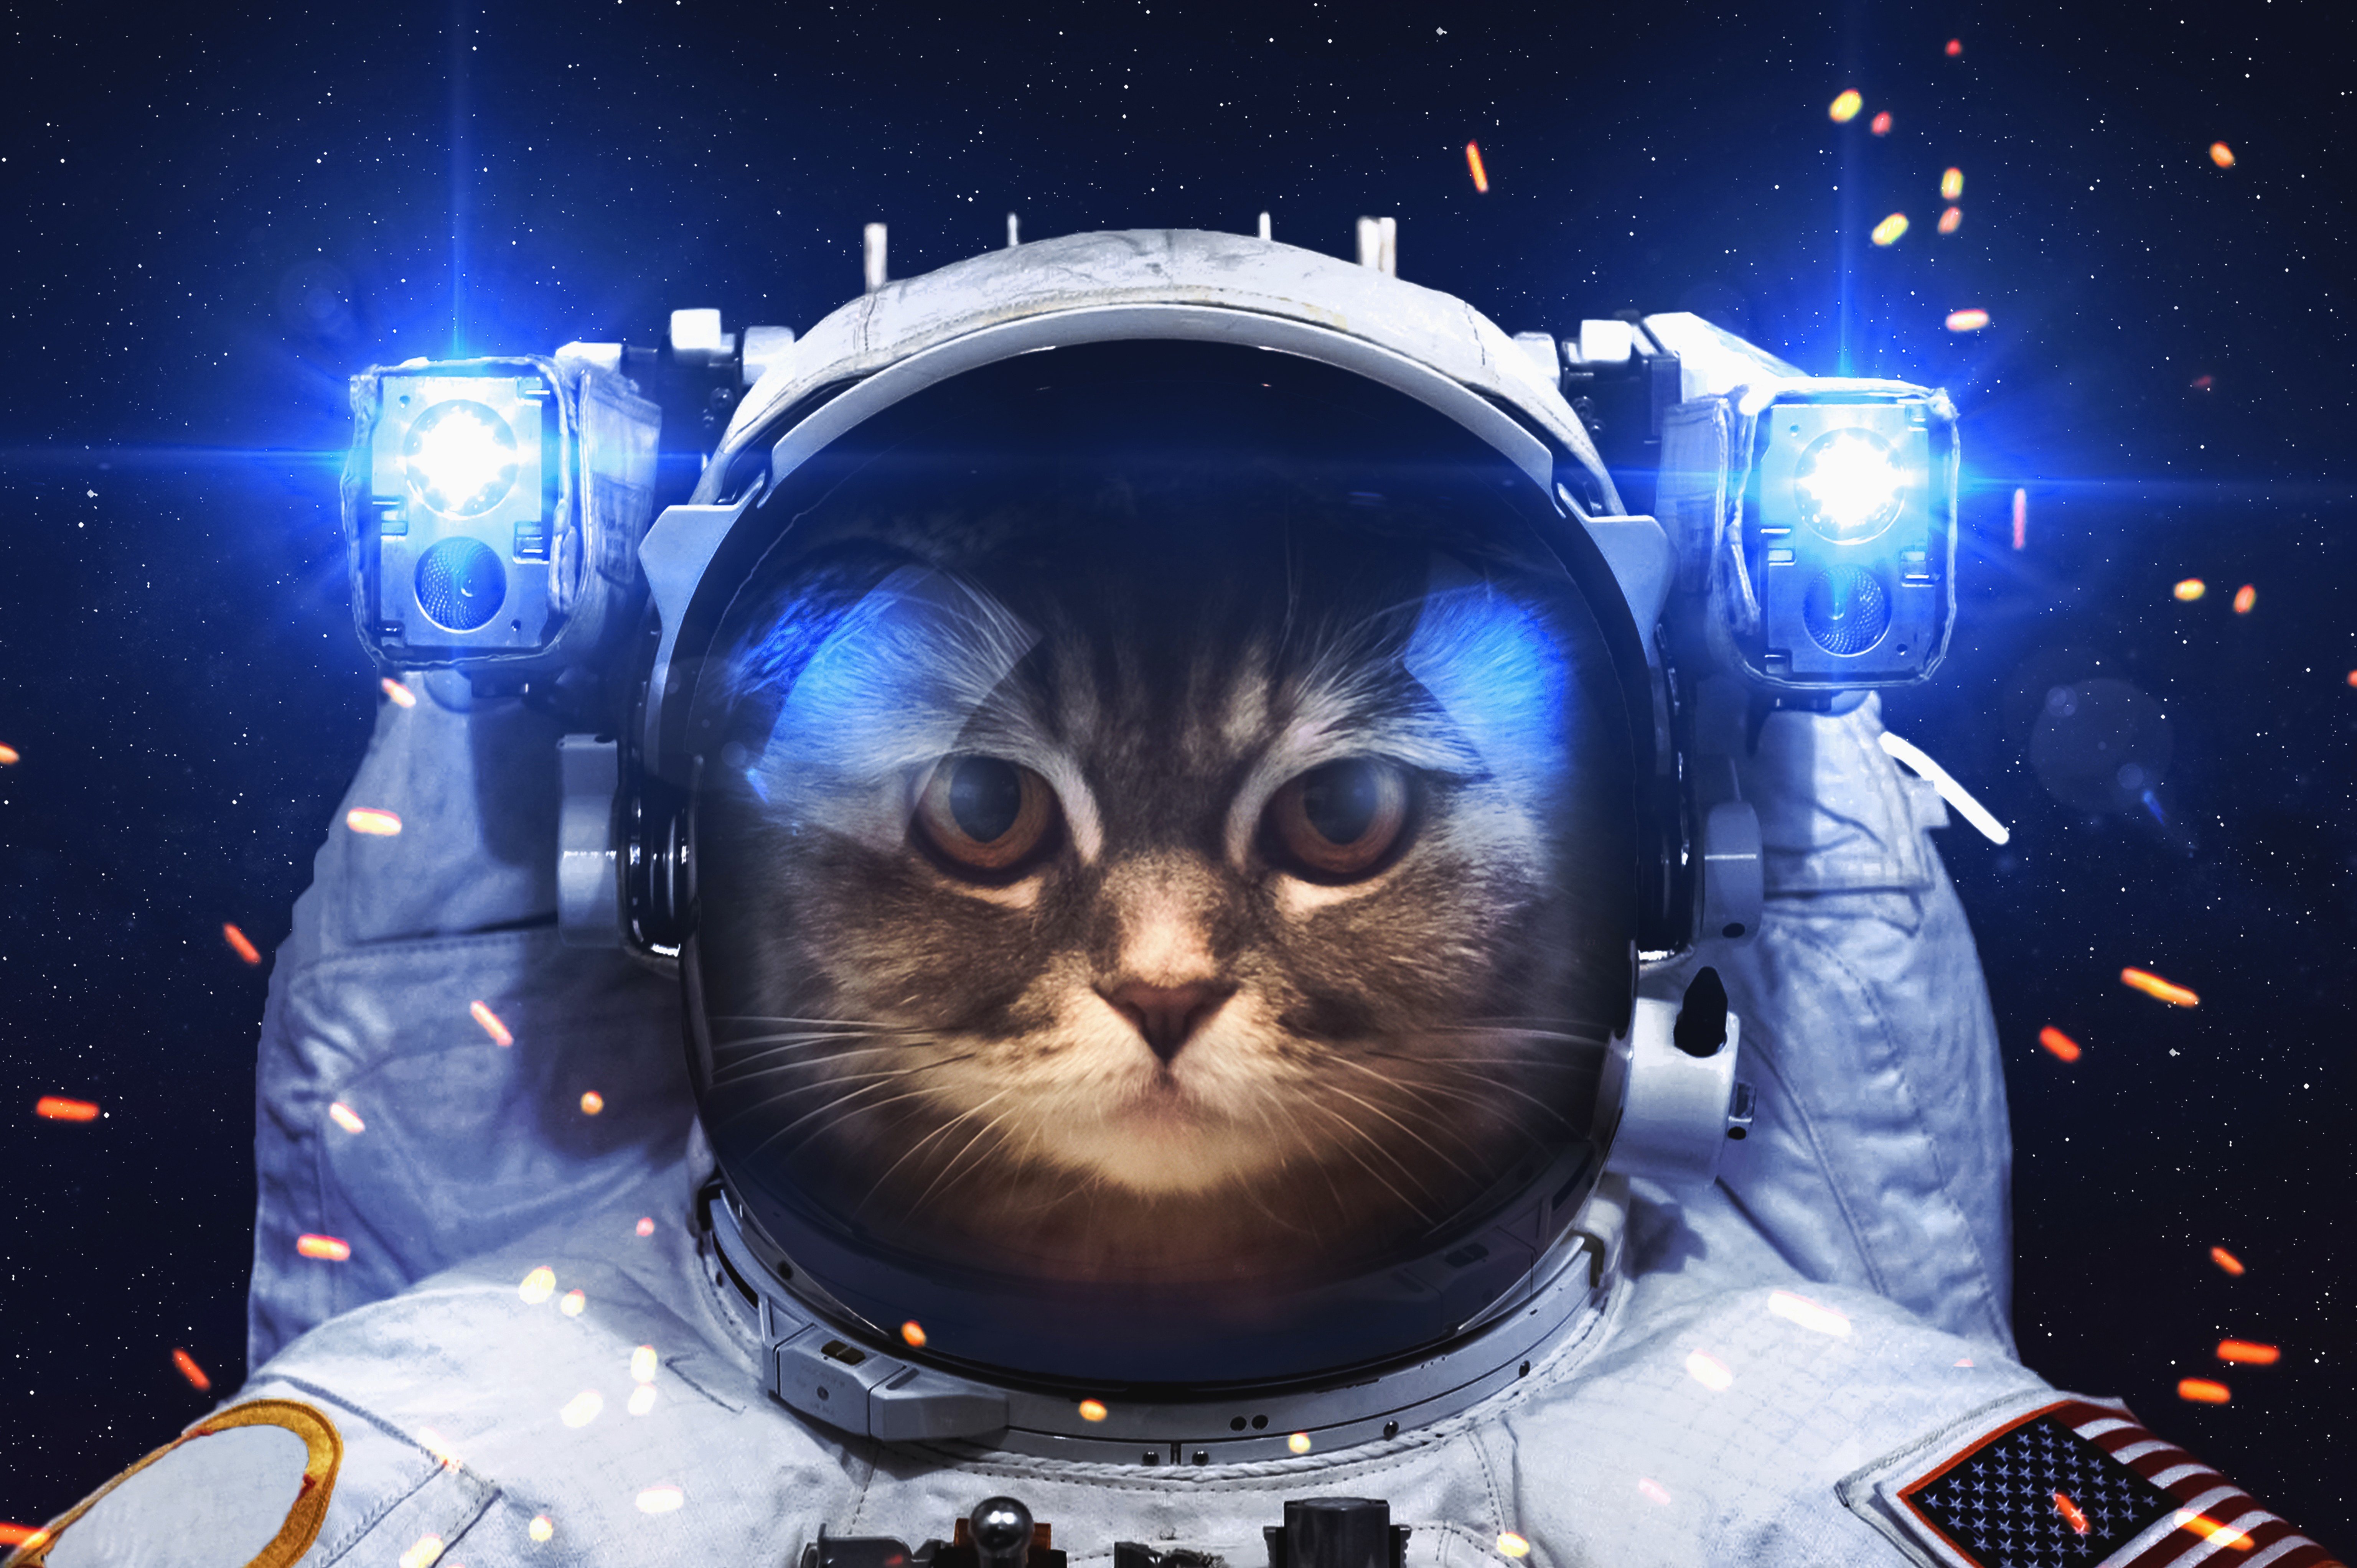 宇宙猫の壁紙,宇宙飛行士,スペース,宇宙,写真撮影,図